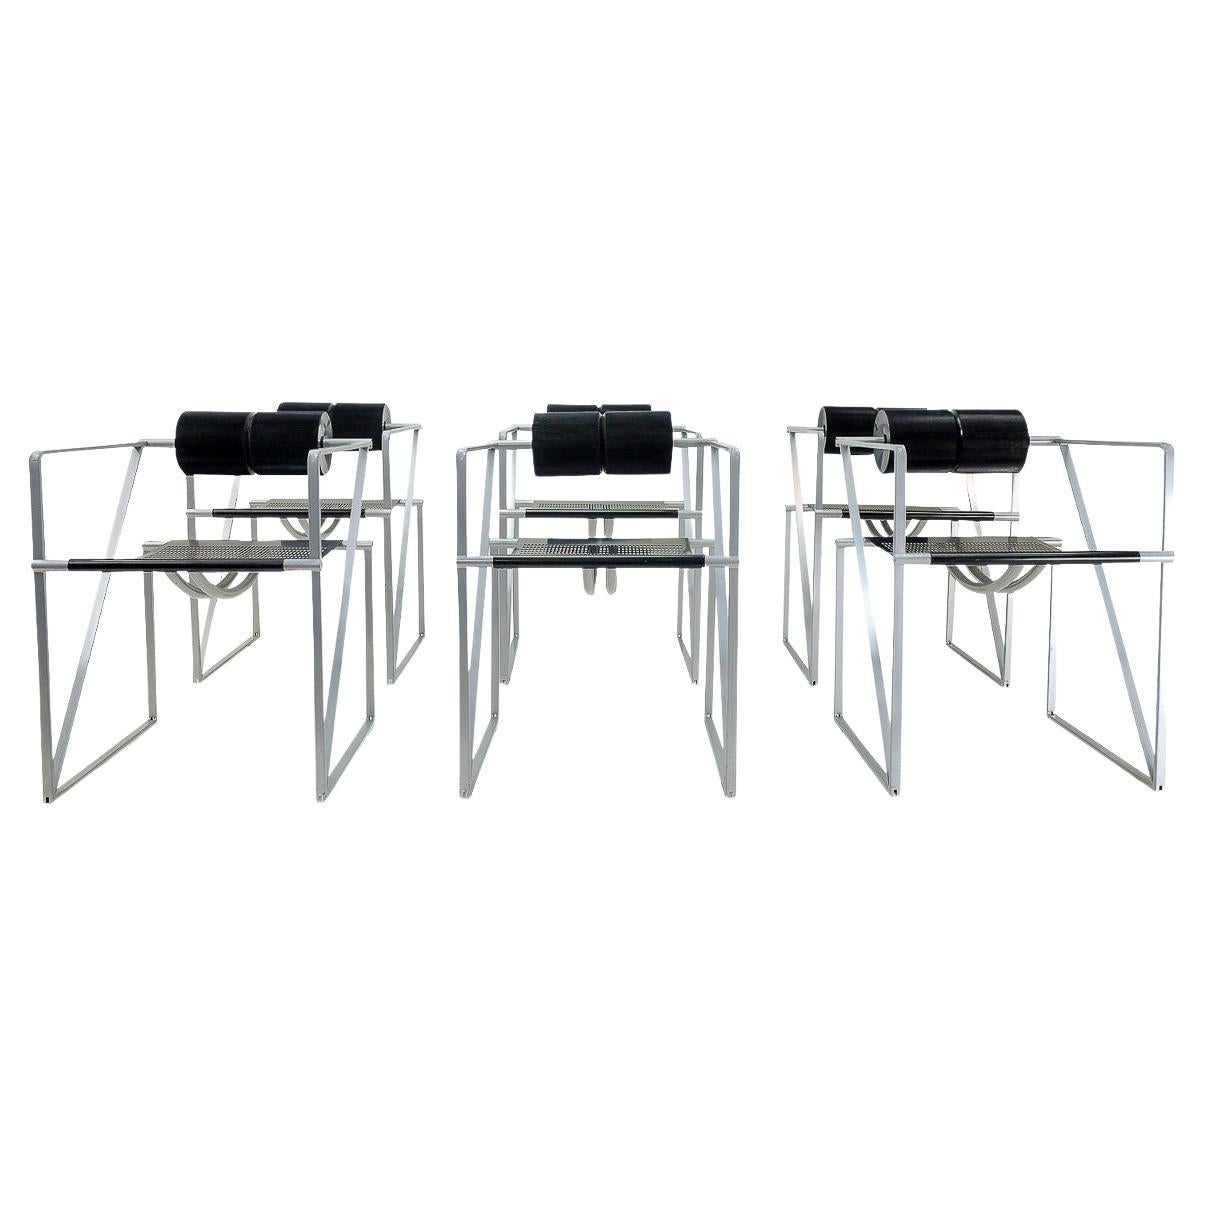 Post Modern Swiss Design Seconda Chairs by Mario Botta for Alias, 1980s